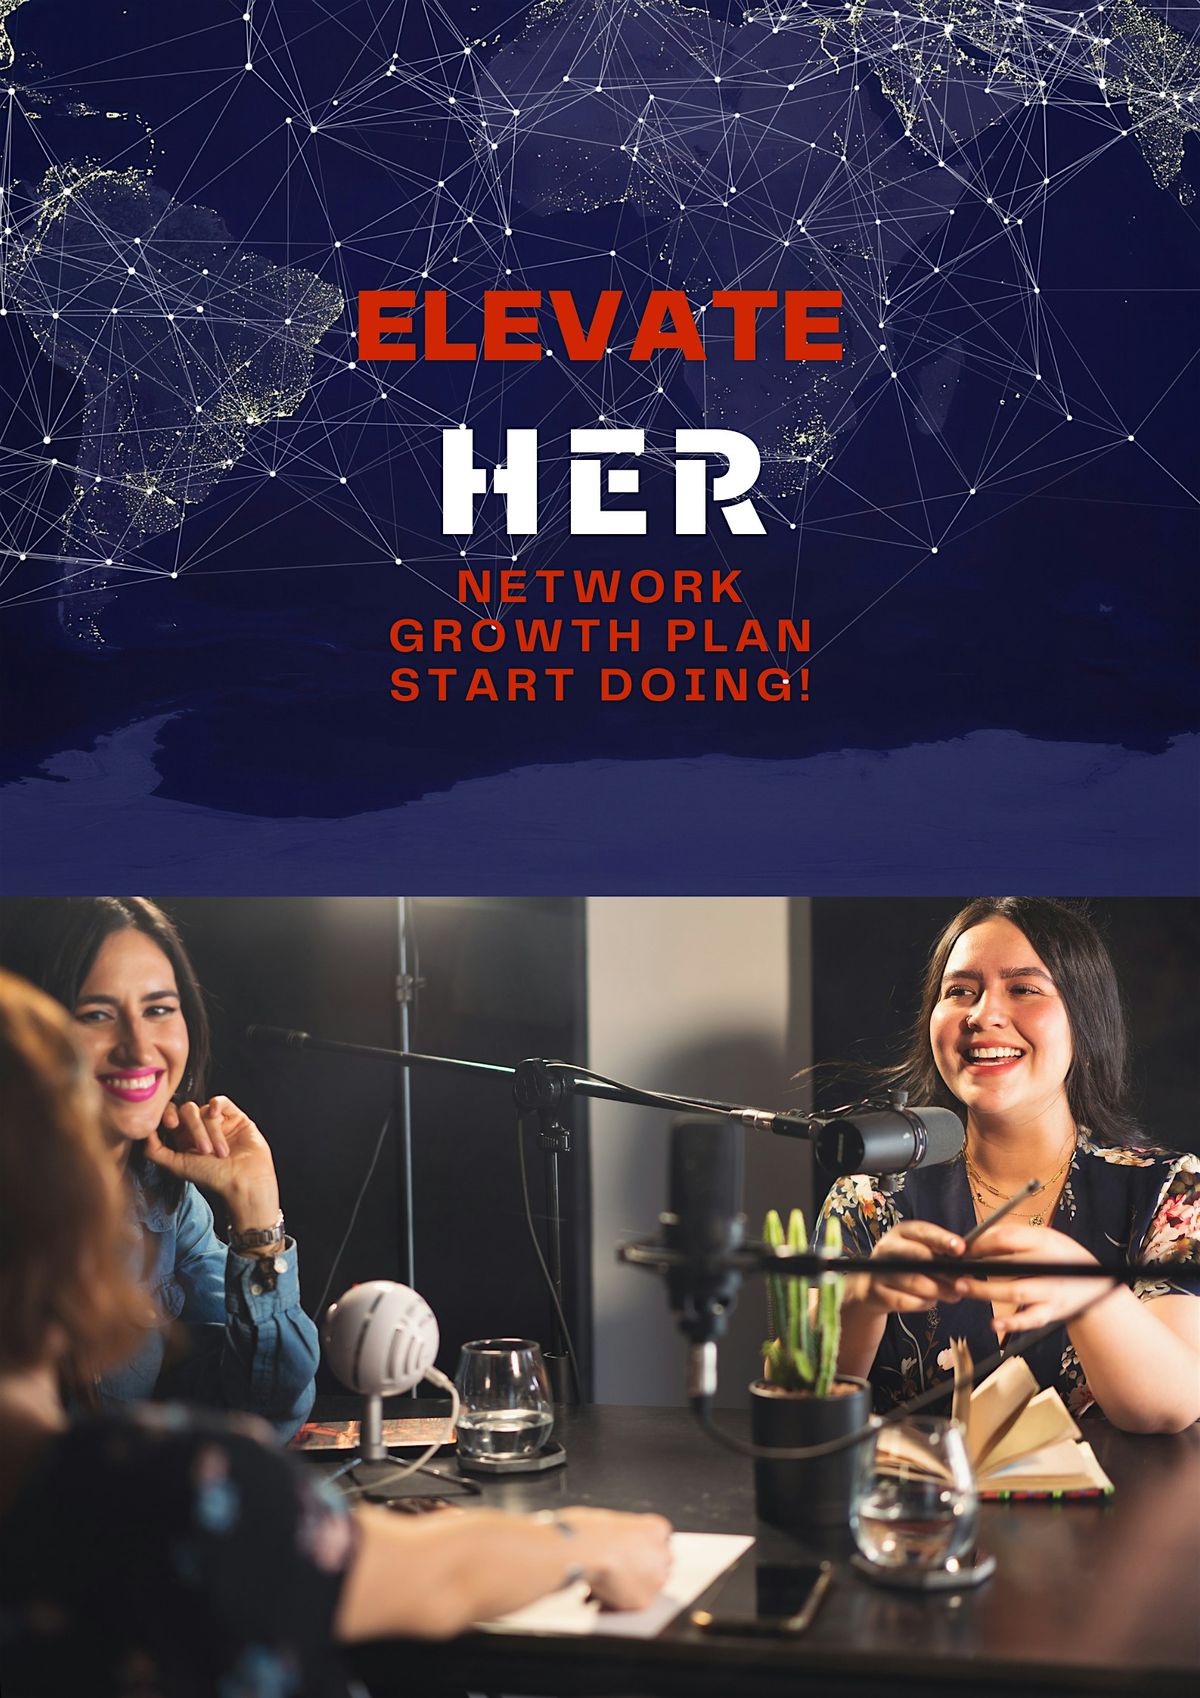 ElevateHer - Meet Female Leaders, Entrepreneurs and  RiseUp